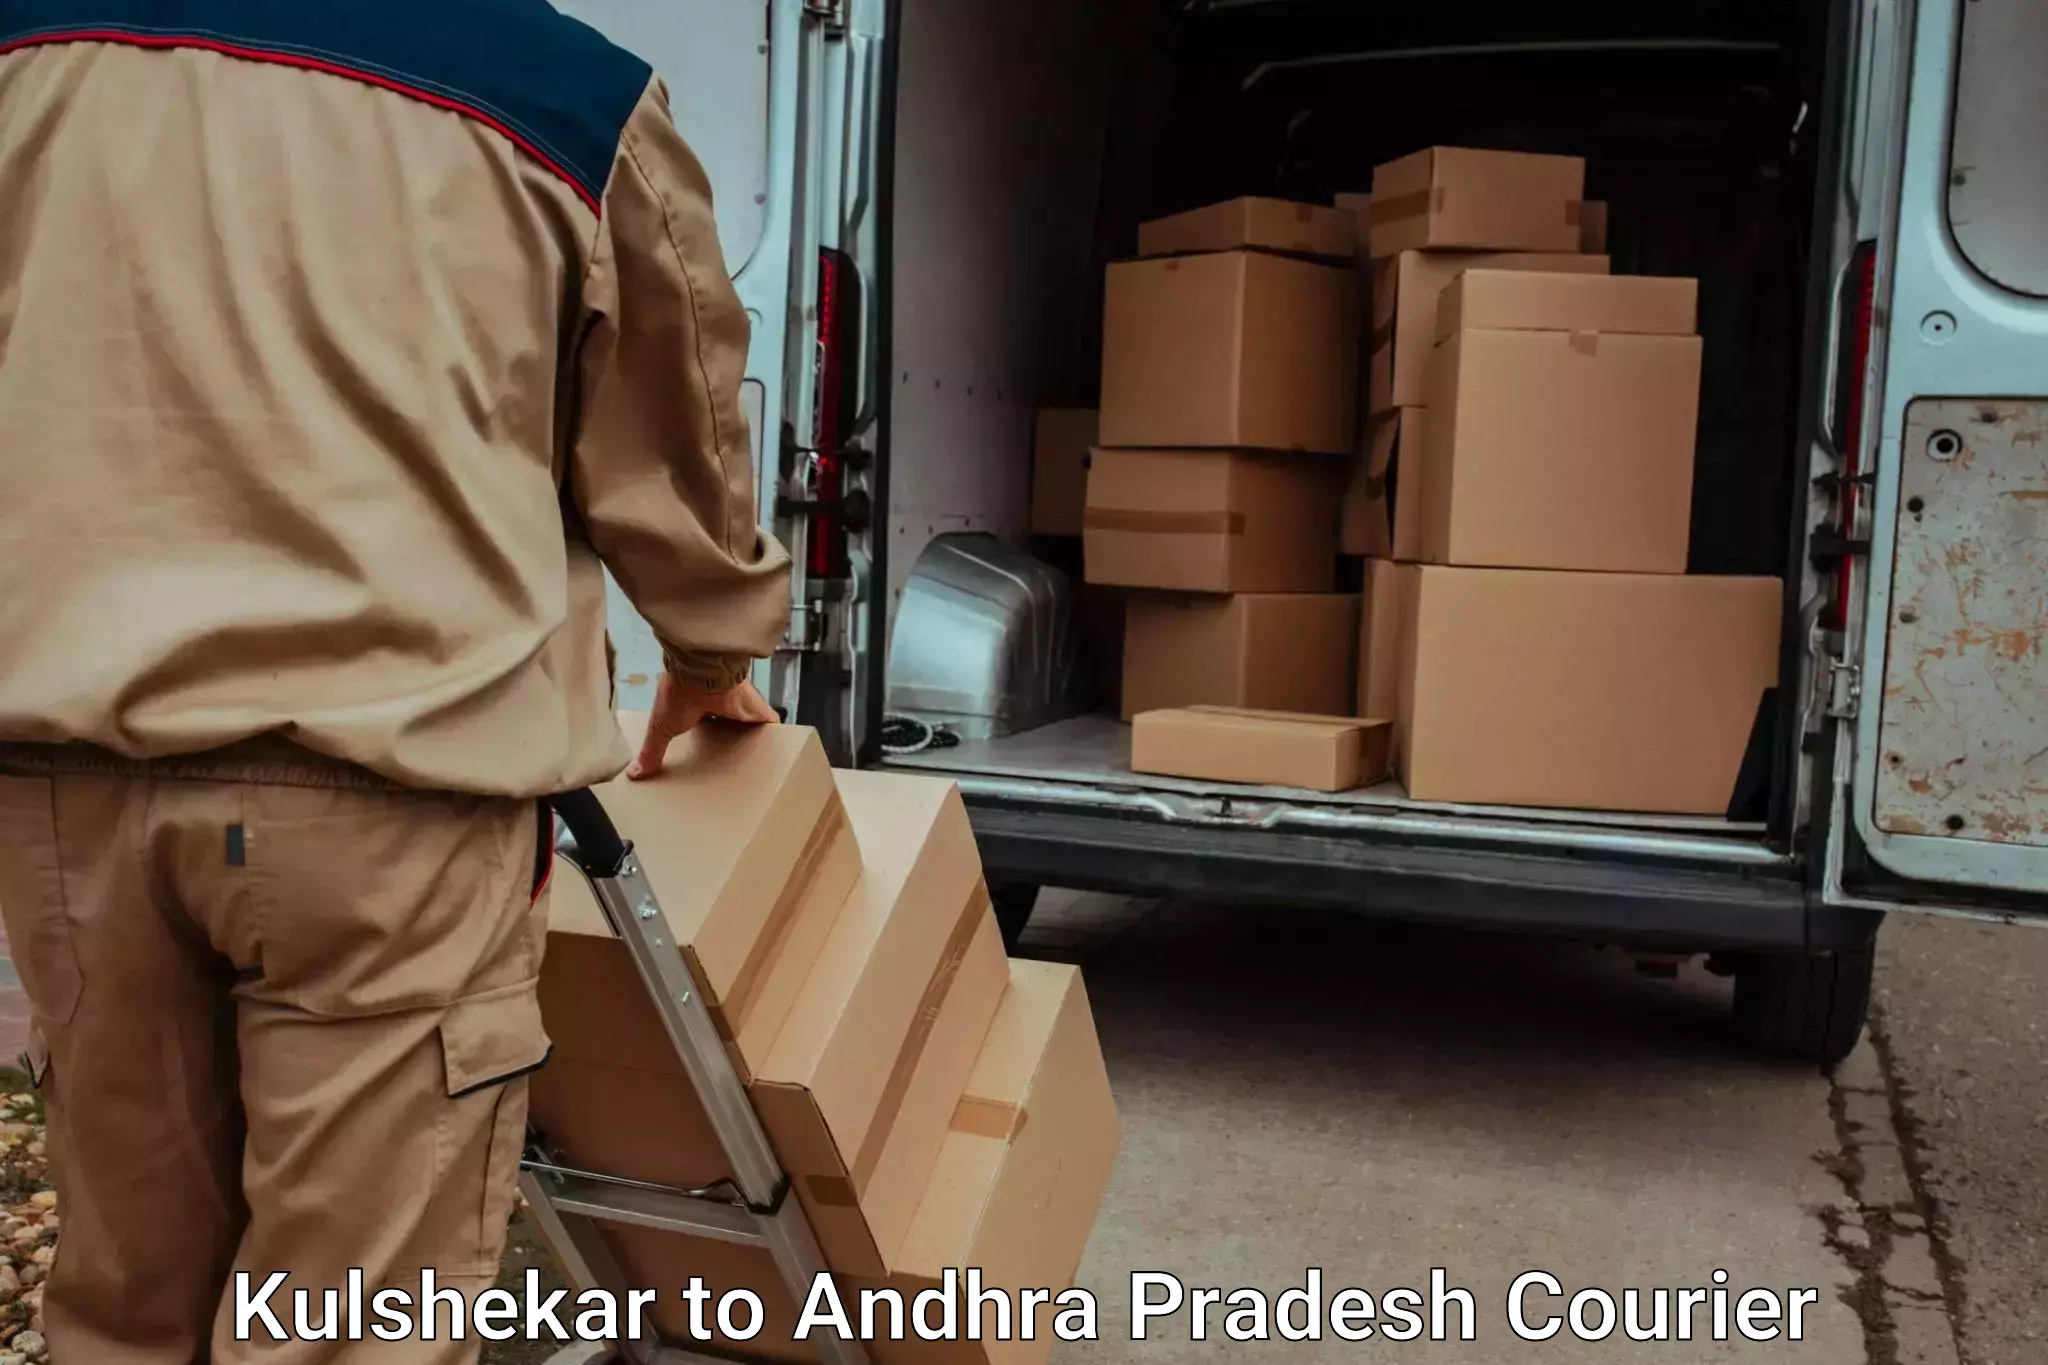 Professional packing services in Kulshekar to Bapatla